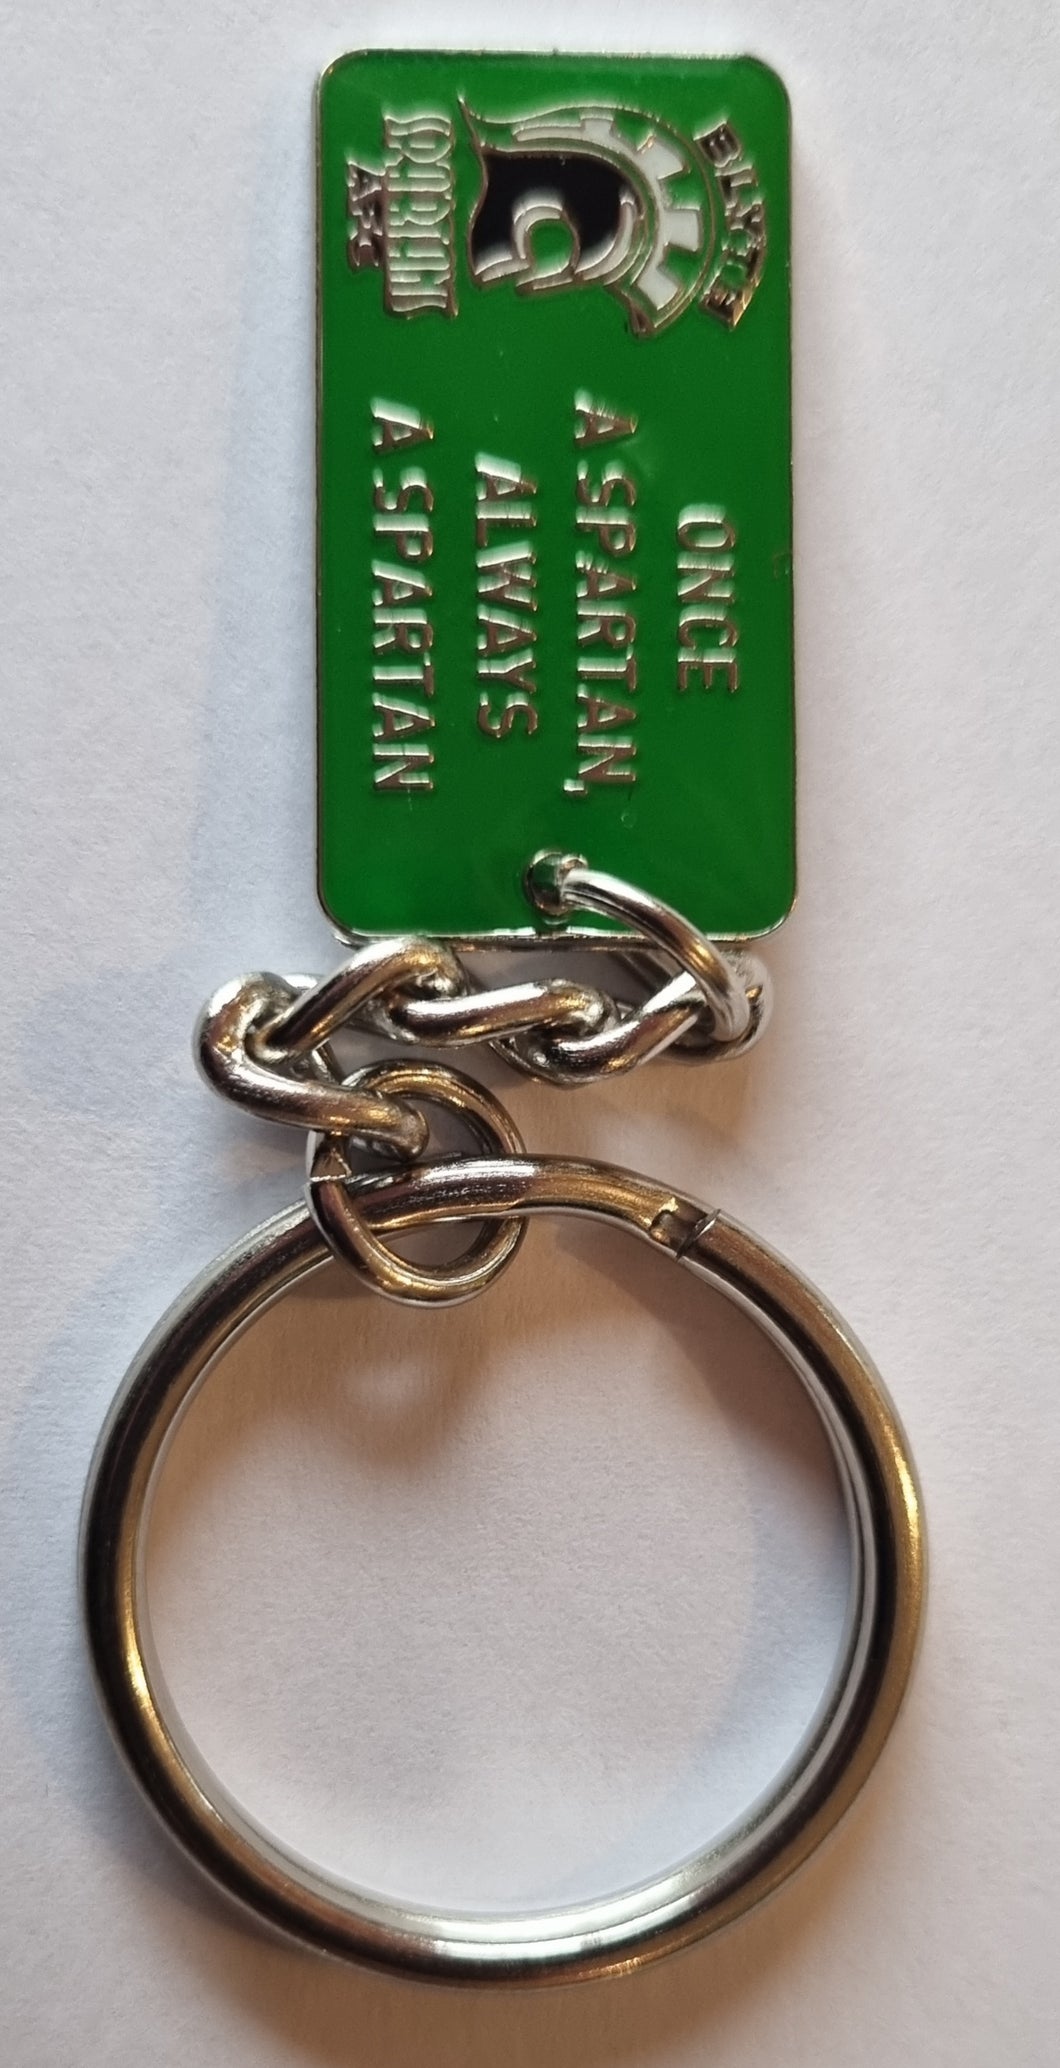 Key Ring